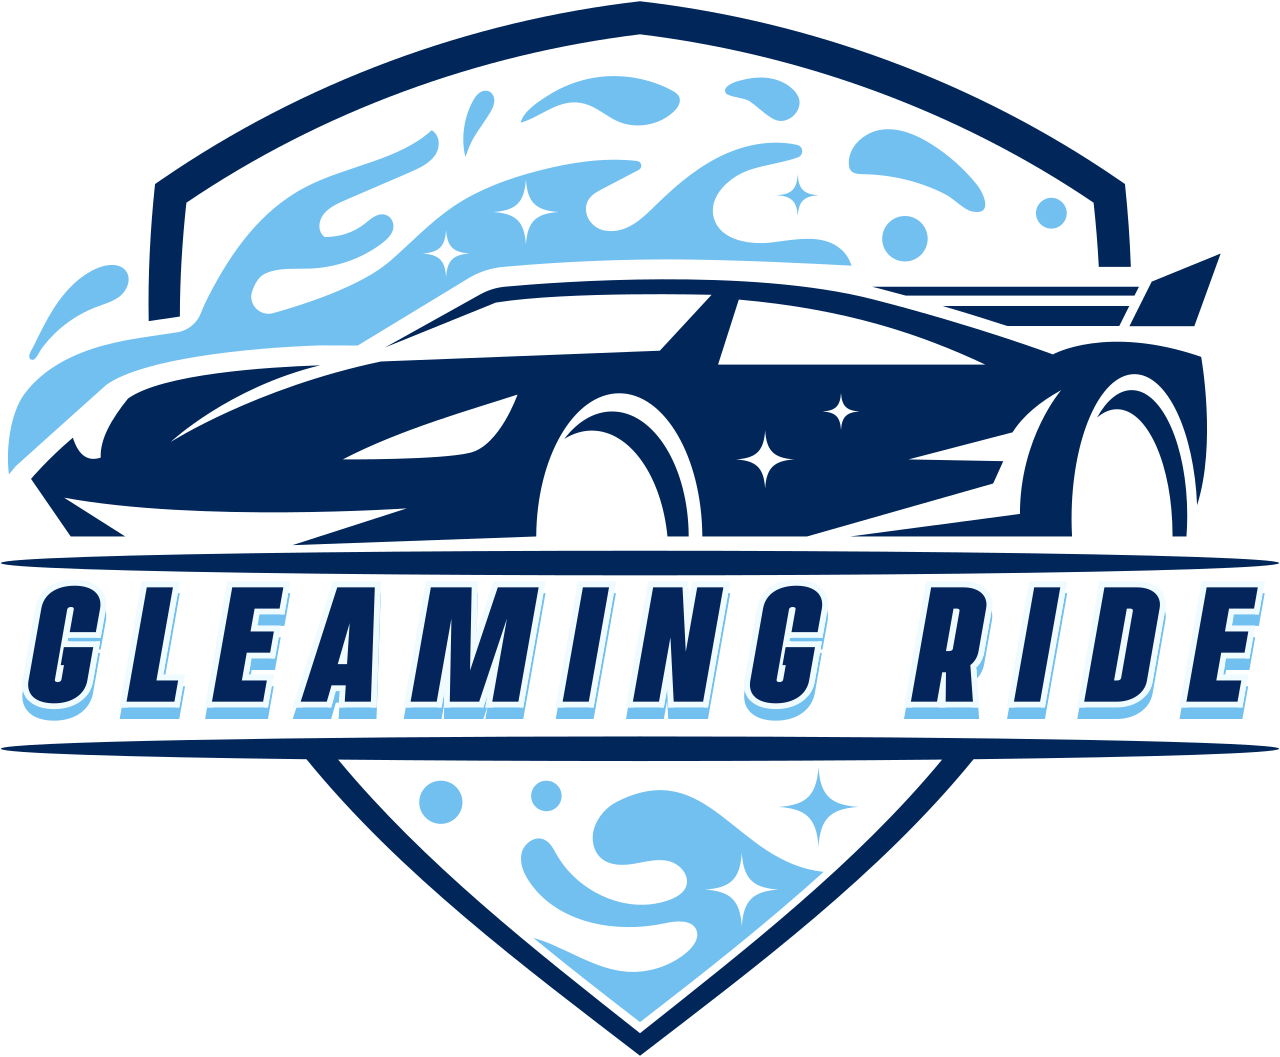 Gleaming Ride's logo